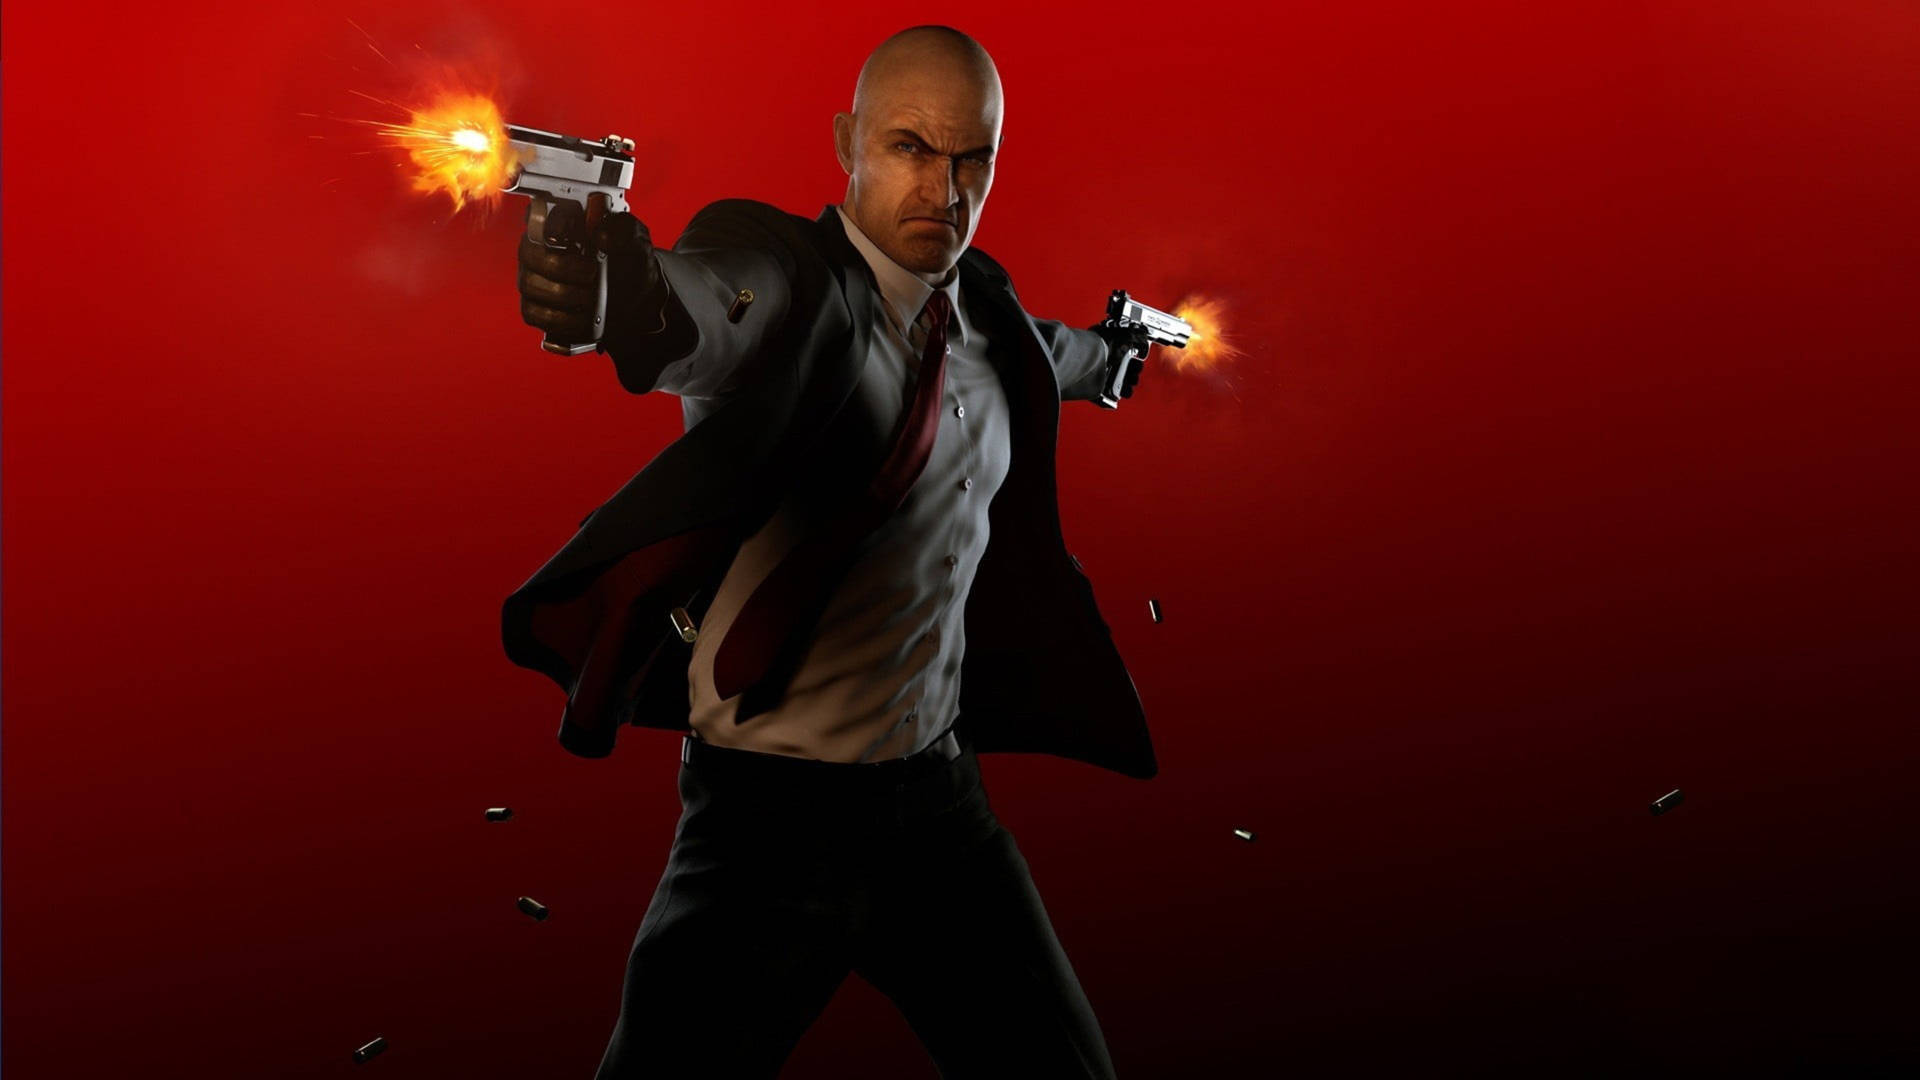 Hitman Full 4k Twin Pistols Red Backdrop Background